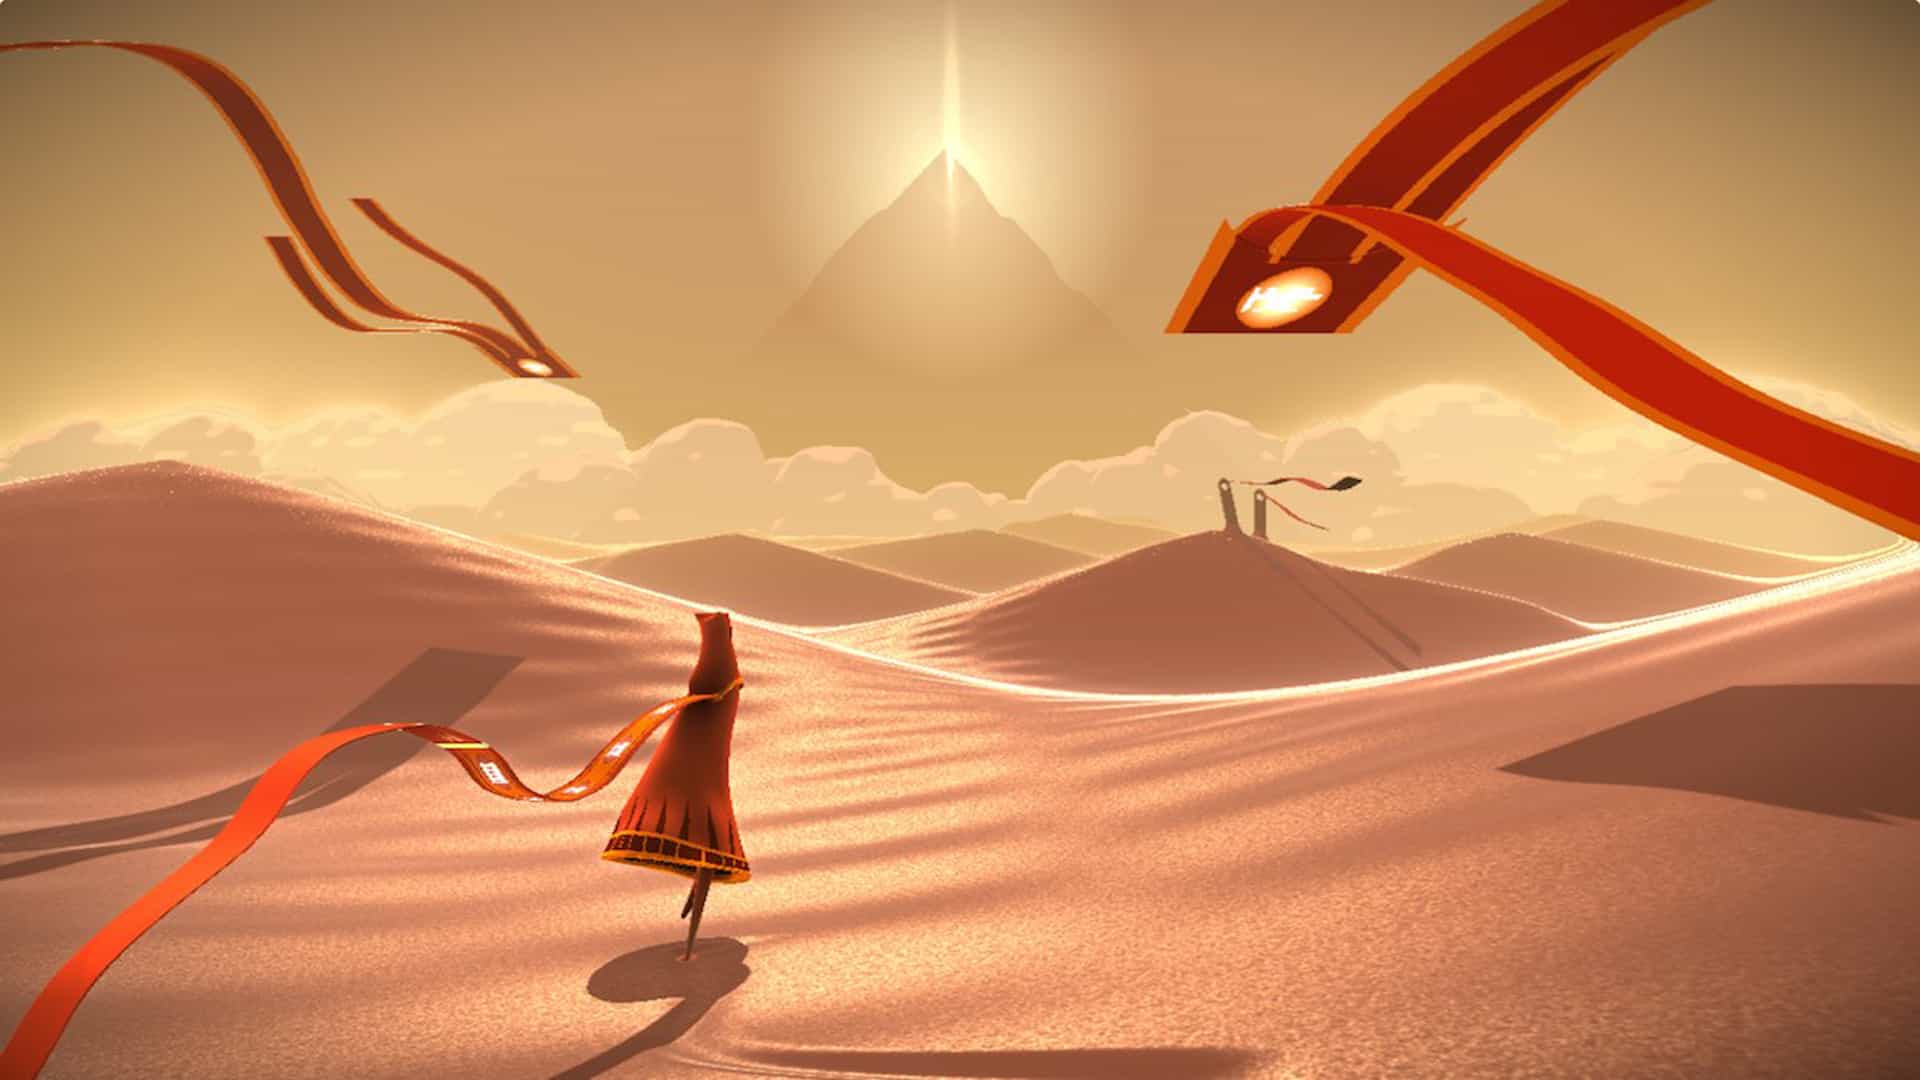 May journey. Journey игра thatgamecompany. Journey (игра, 2012). Джорни путешествие игра. Пустыня из игры Джорни.